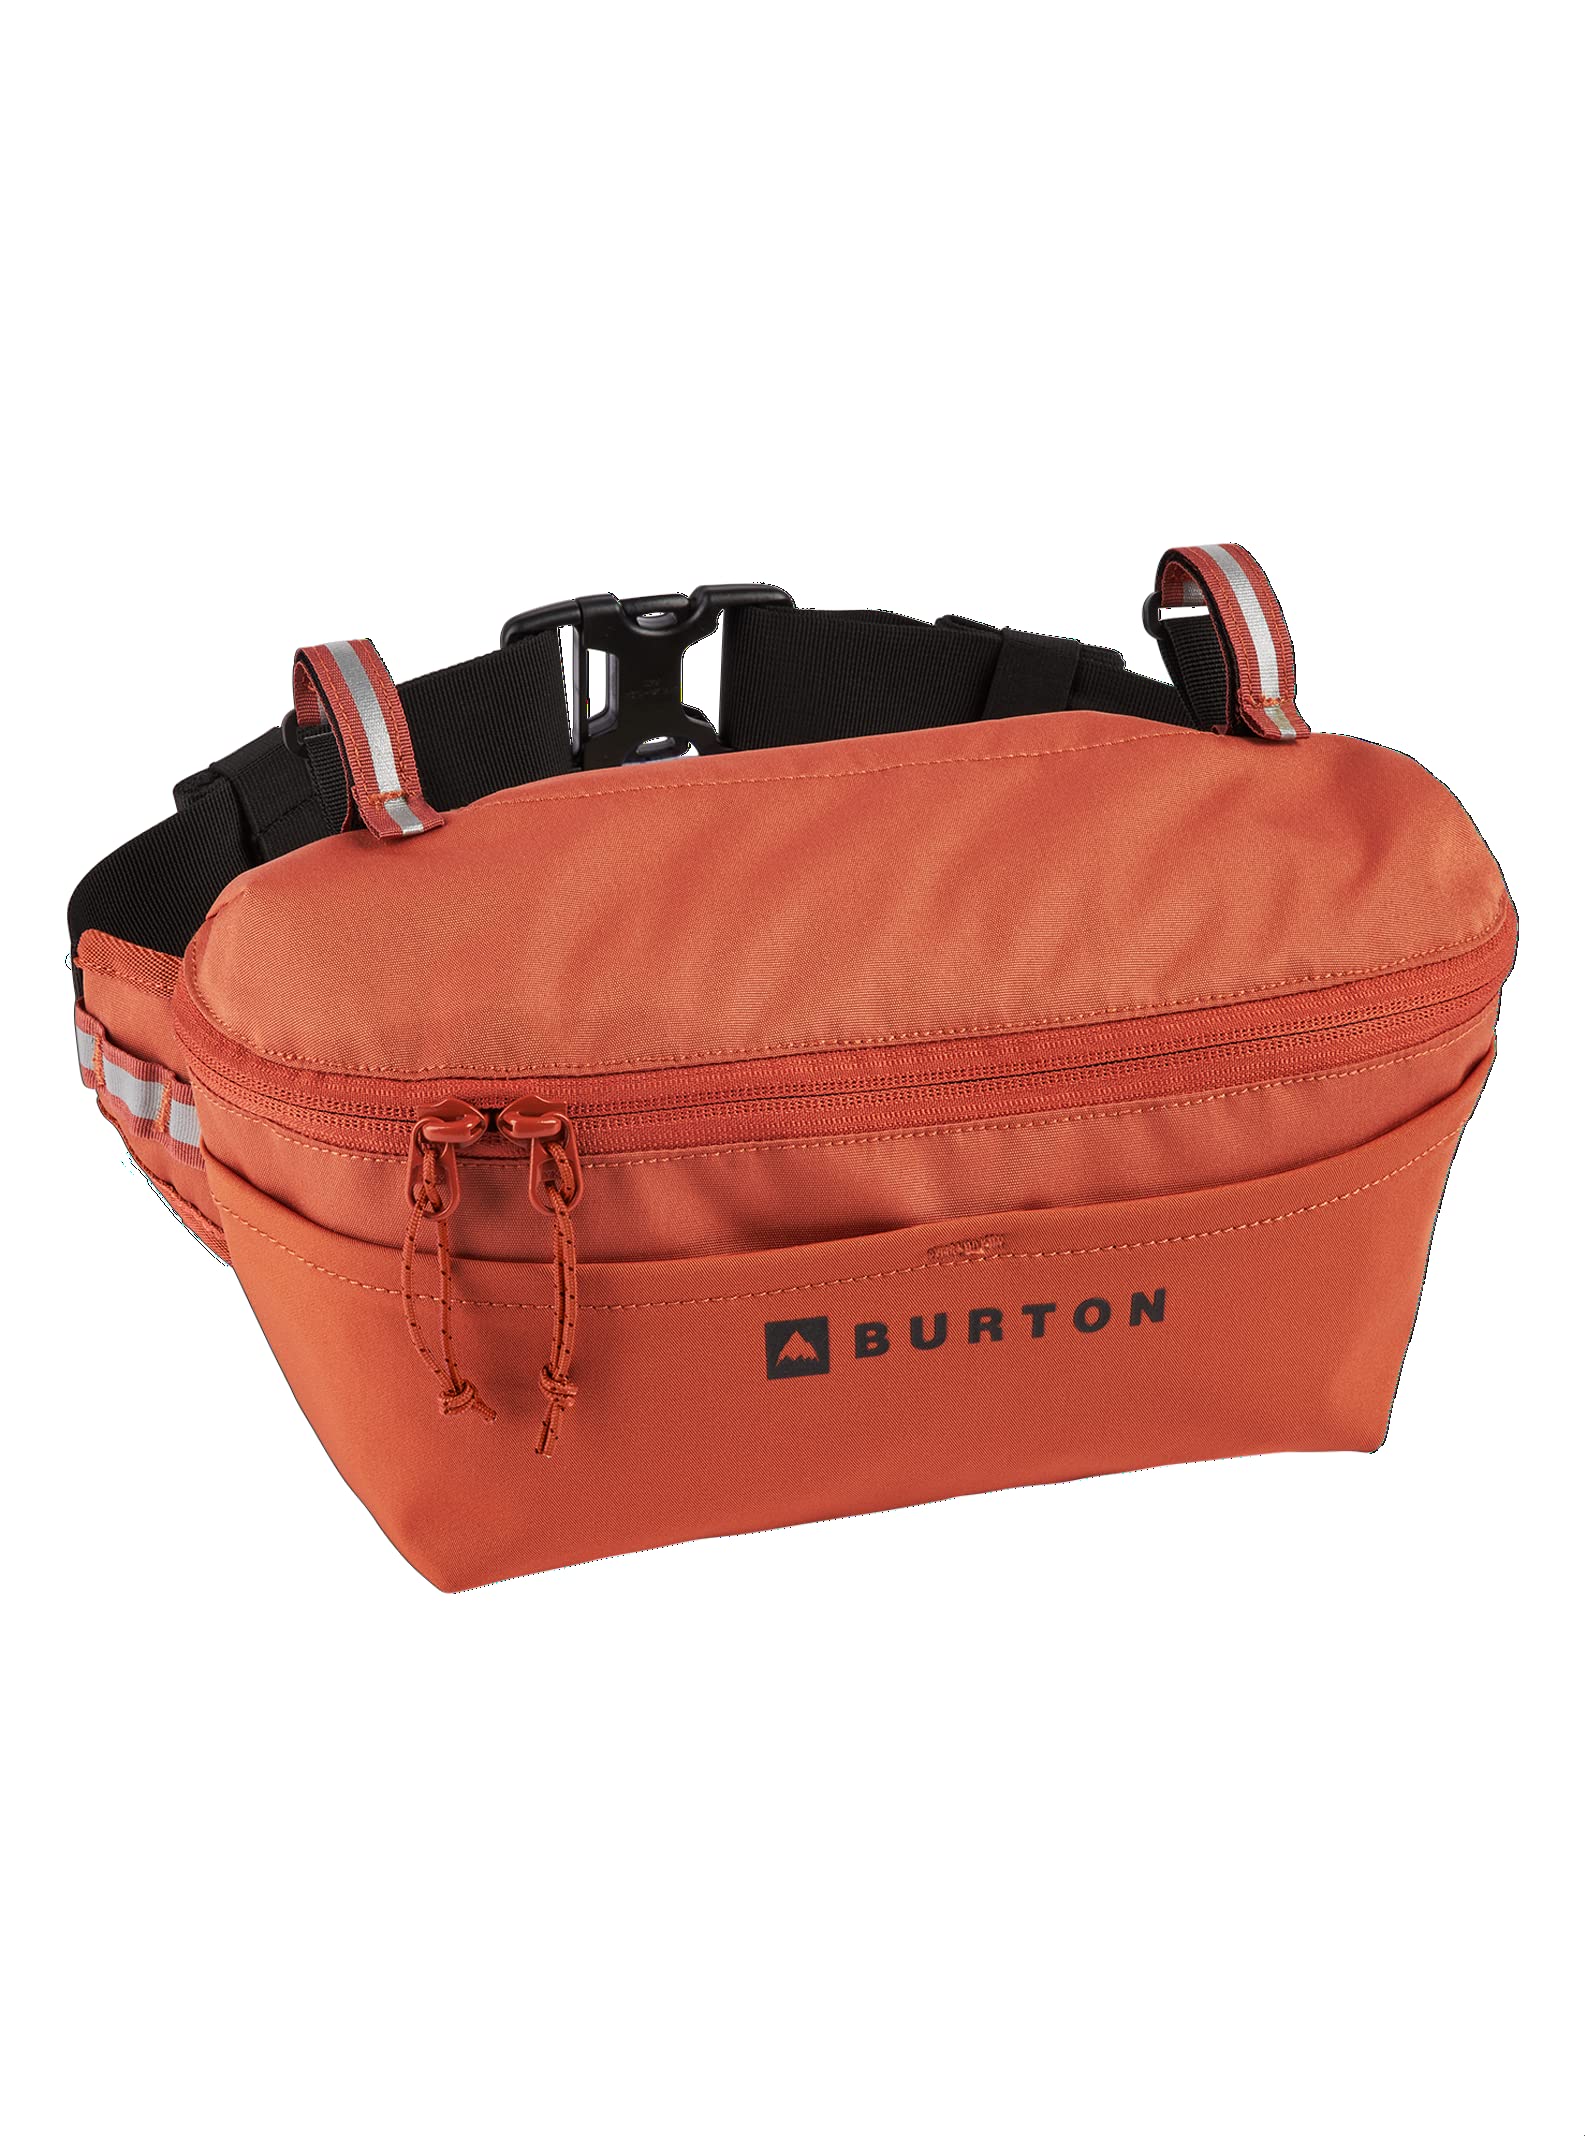 Burton Multipath 5L Accessory Bag, Baked Clay Cordura, One Size